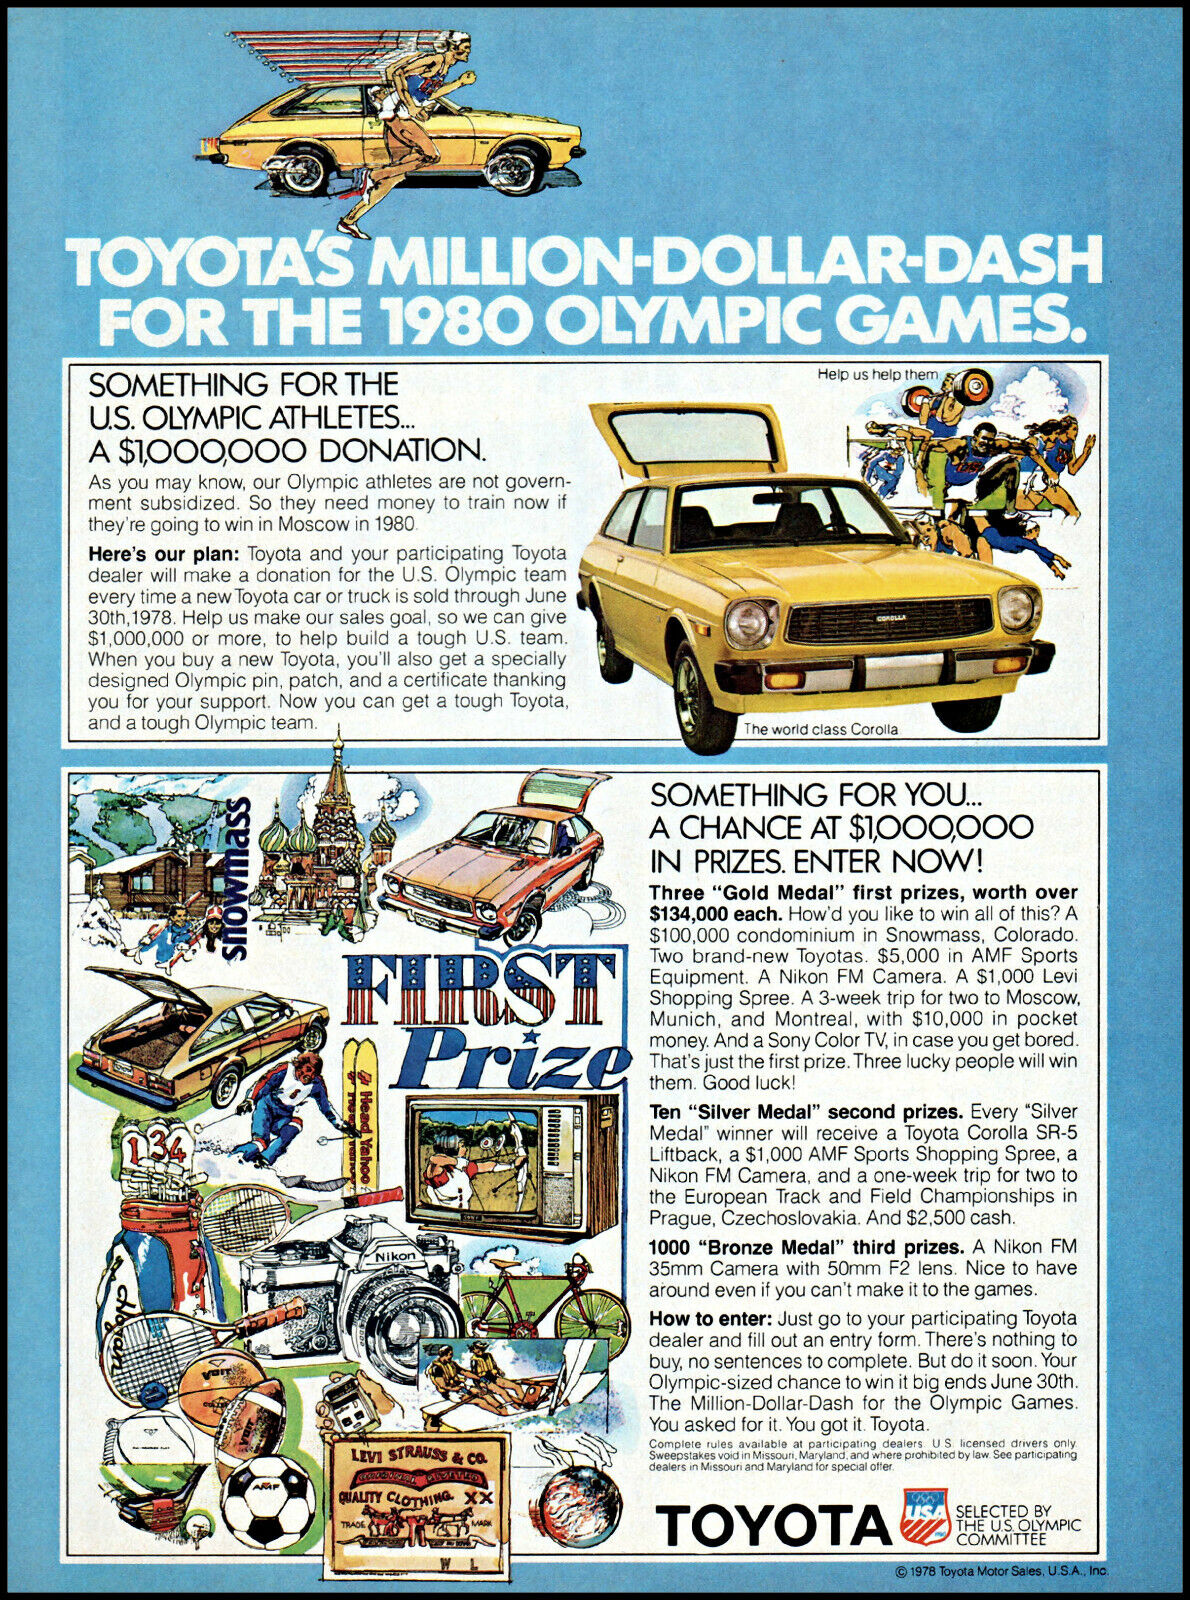 1978 Toyota Corolla Car USA Olympic Team official cars retro photo print ad ads6